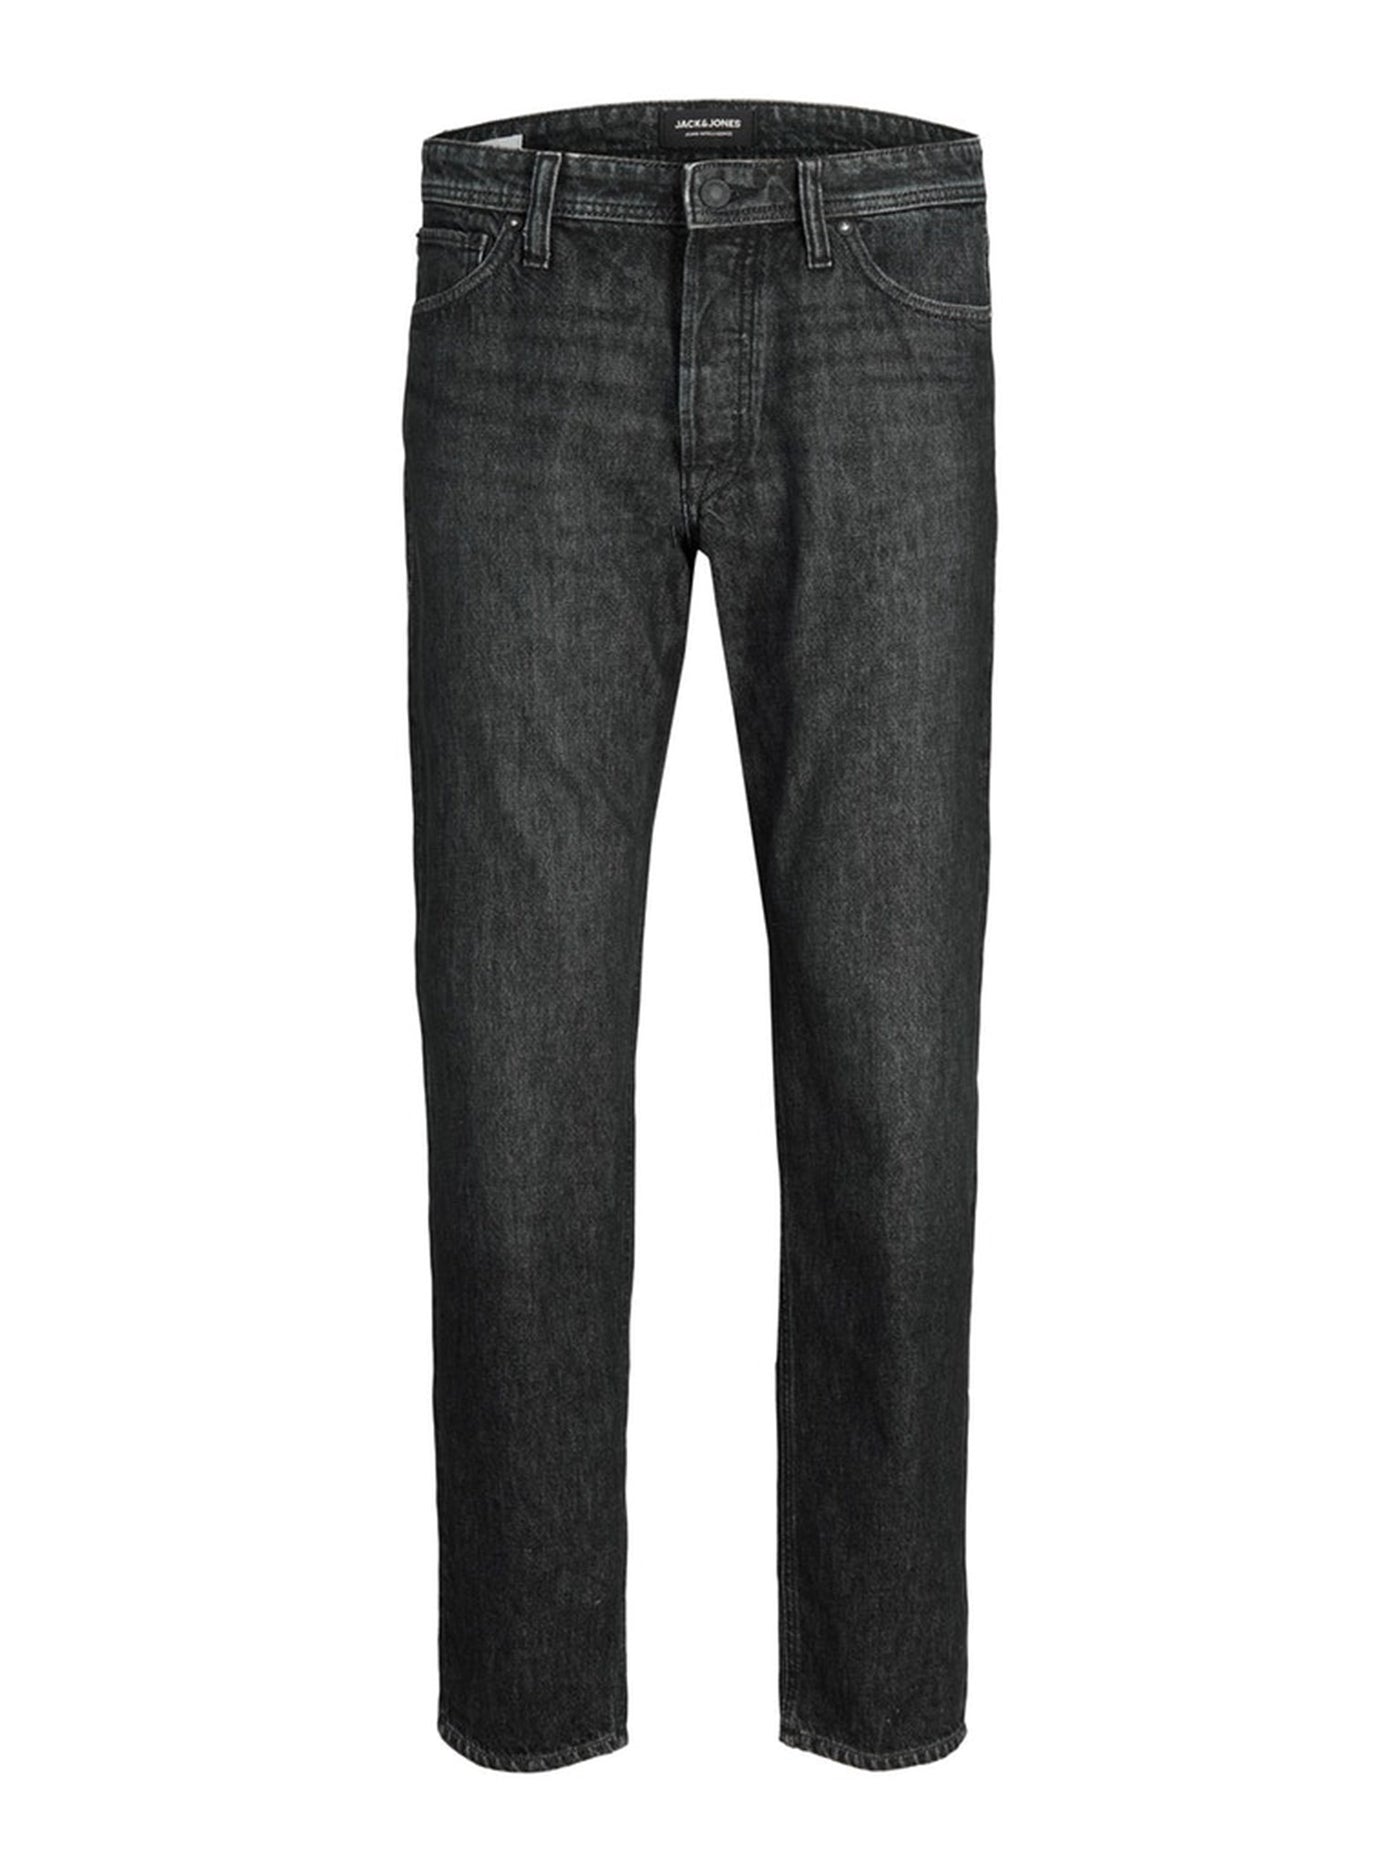 Chris Original Jeans MF993 - Black Denim - Jack & Jones 6